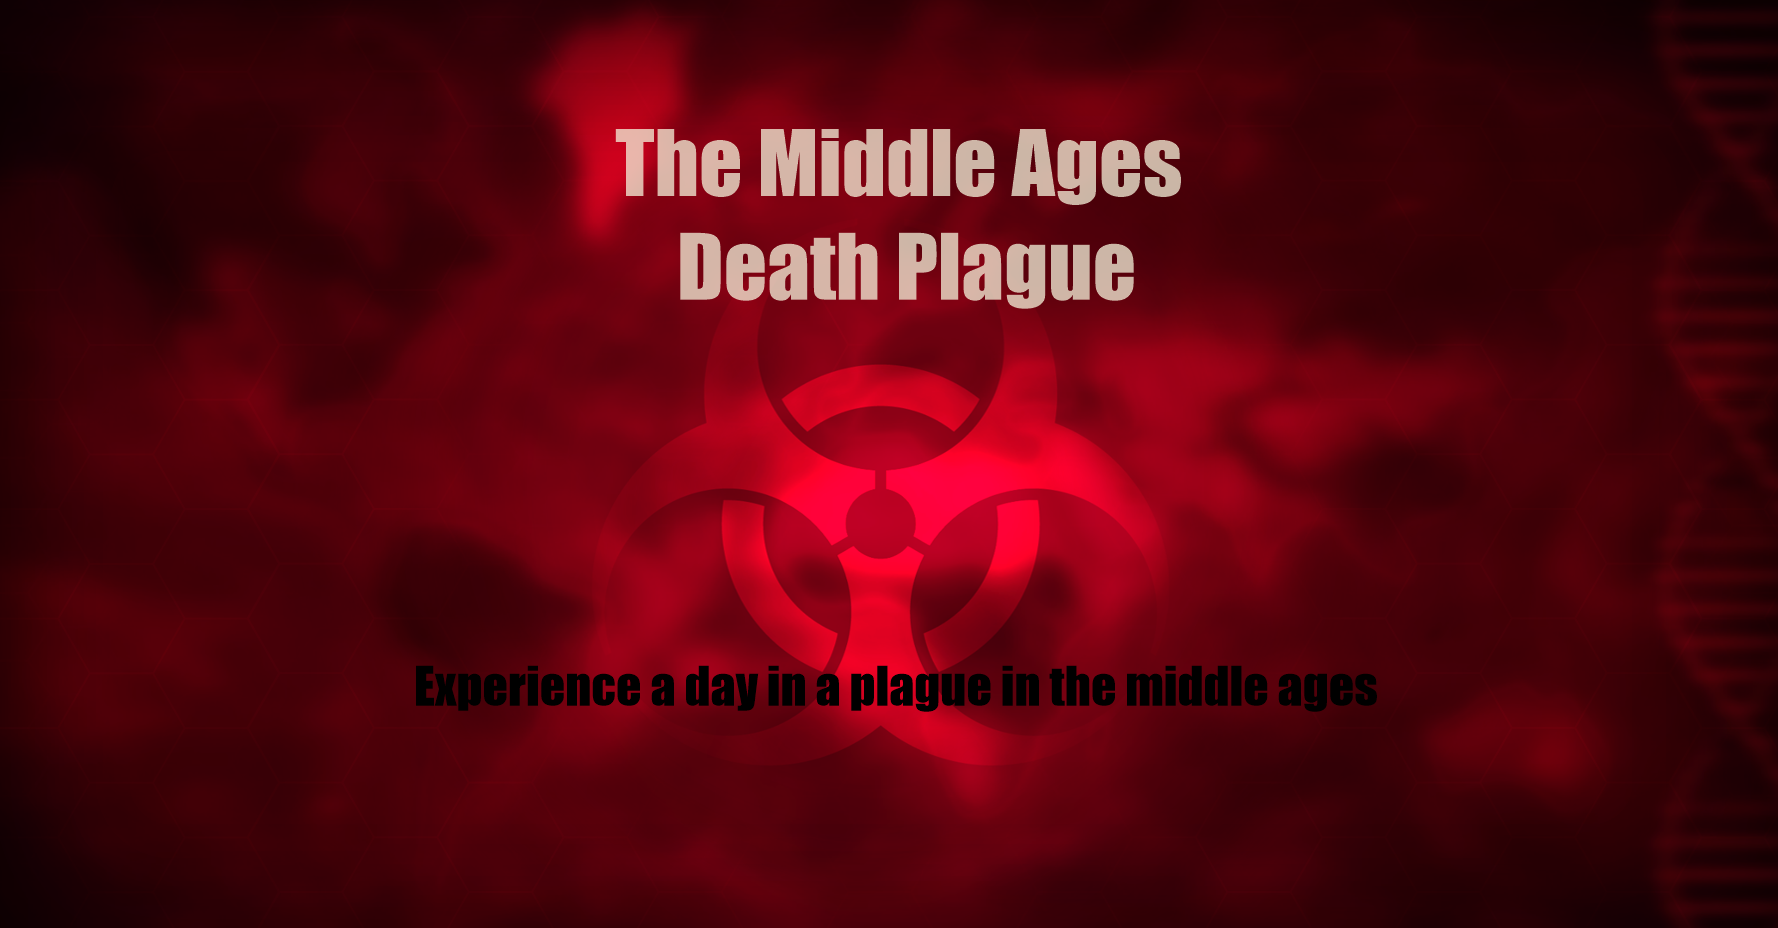 The medieval plague